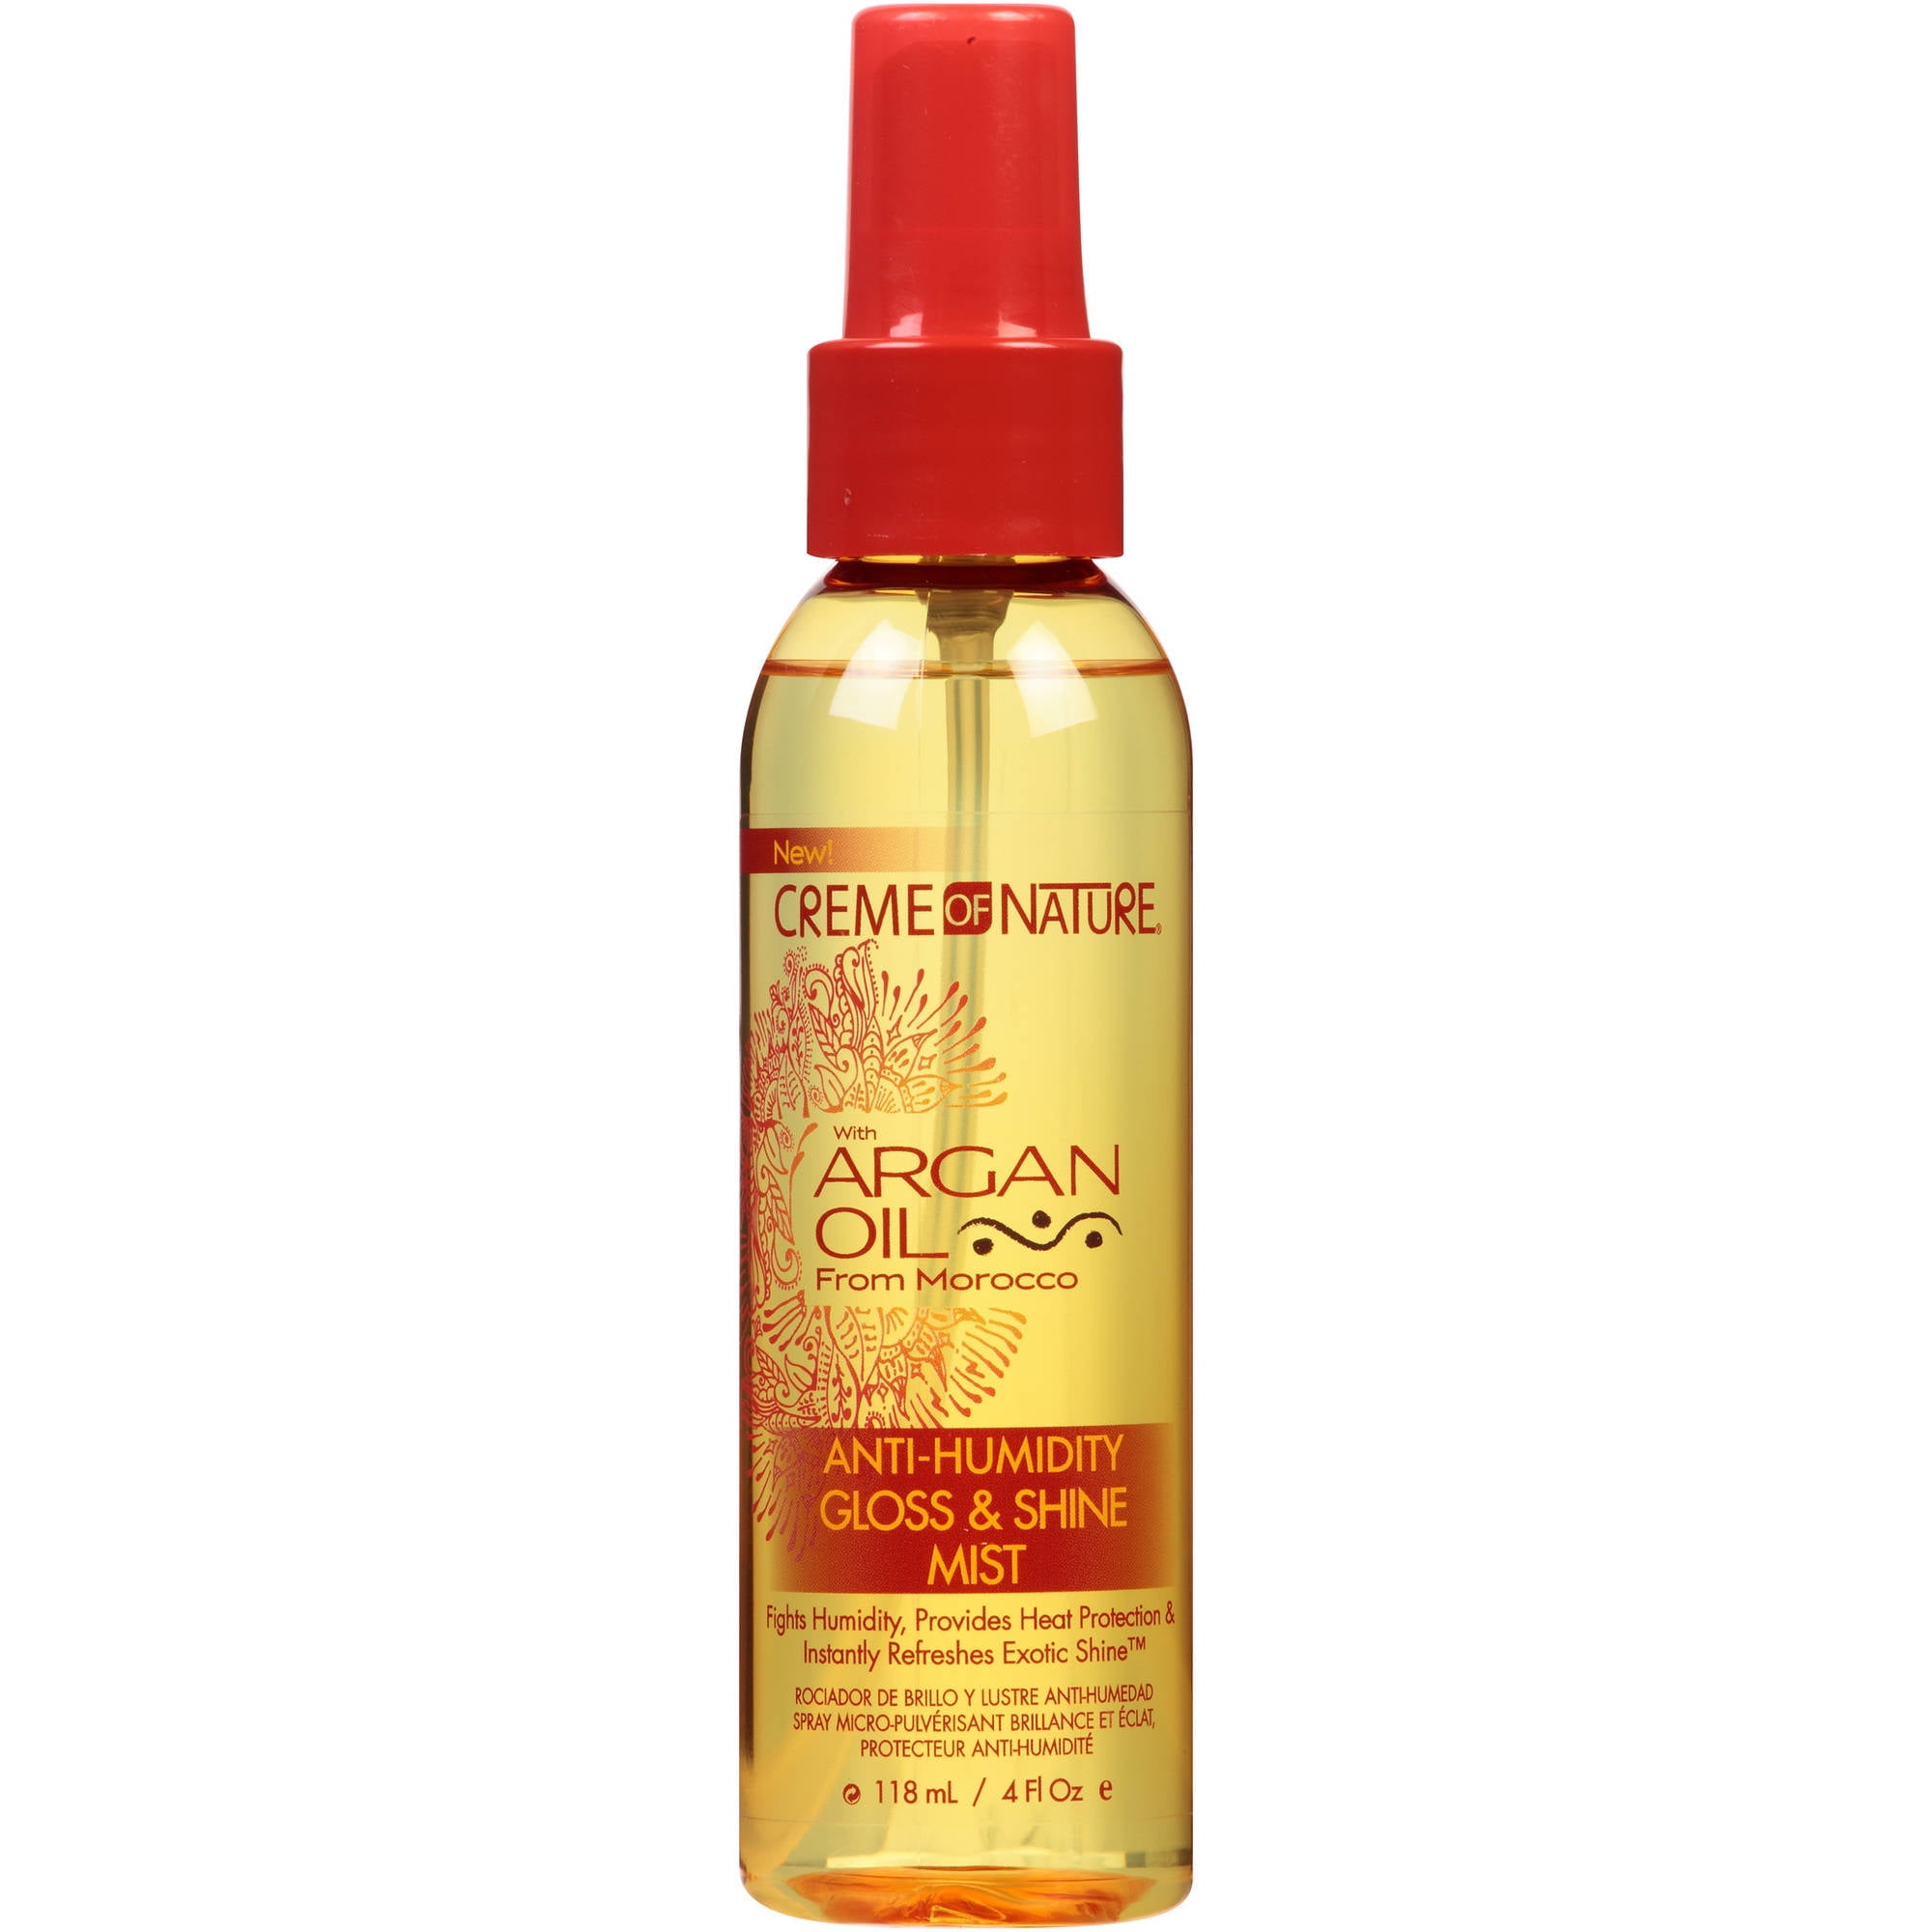 Creme of Nature Argan Oil from Morocco Anti-Humidity Gloss & Shine Mist Hair Oil, 4 fl oz - Walmart.com